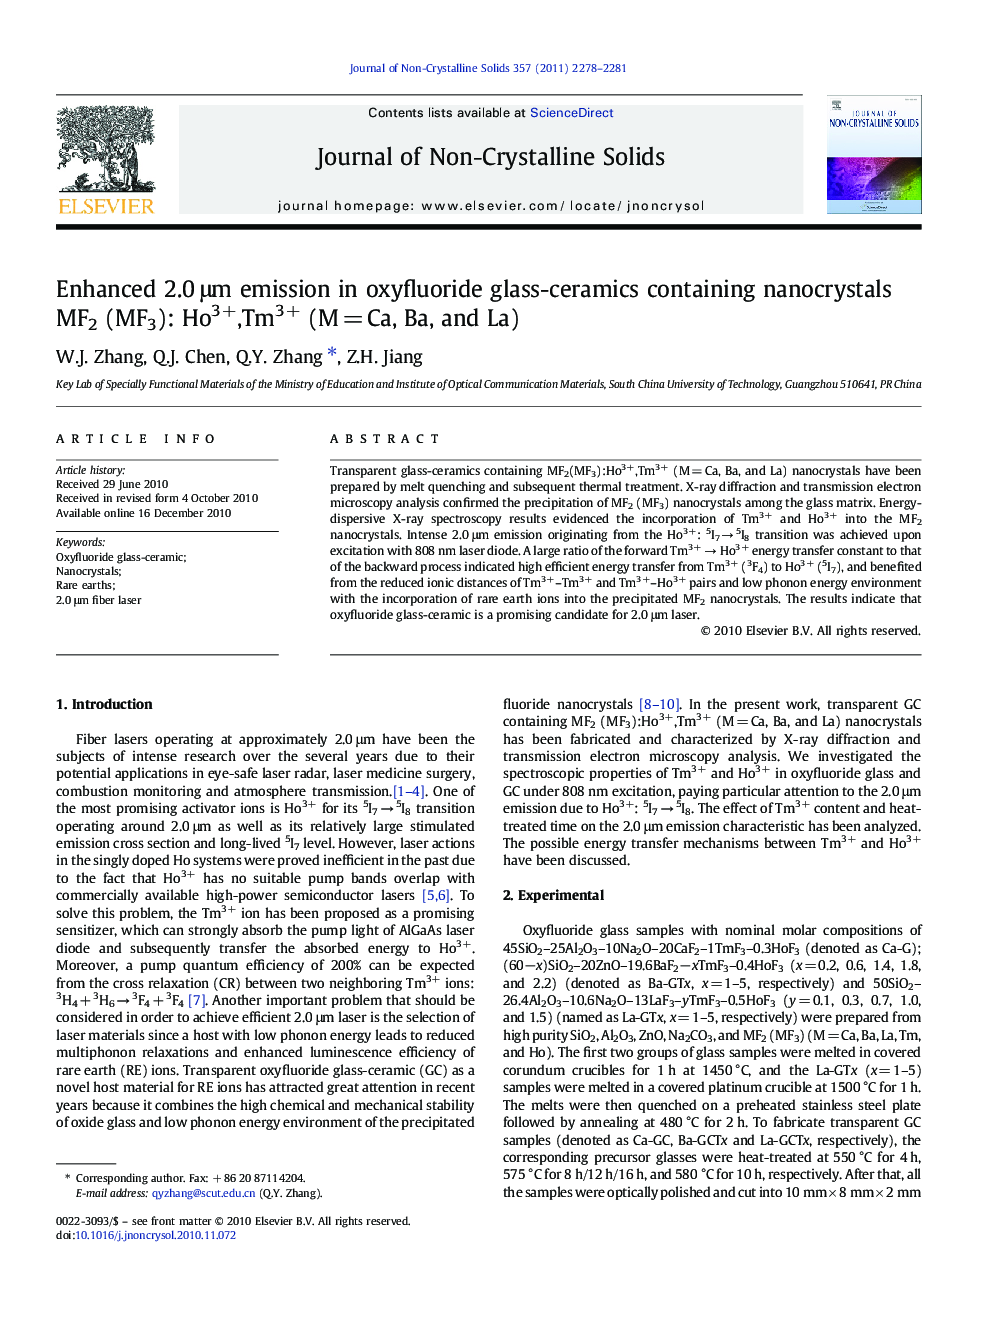 Enhanced 2.0Â Î¼m emission in oxyfluoride glass-ceramics containing nanocrystals MF2 (MF3): Ho3+,Tm3+ (MÂ =Â Ca, Ba, and La)